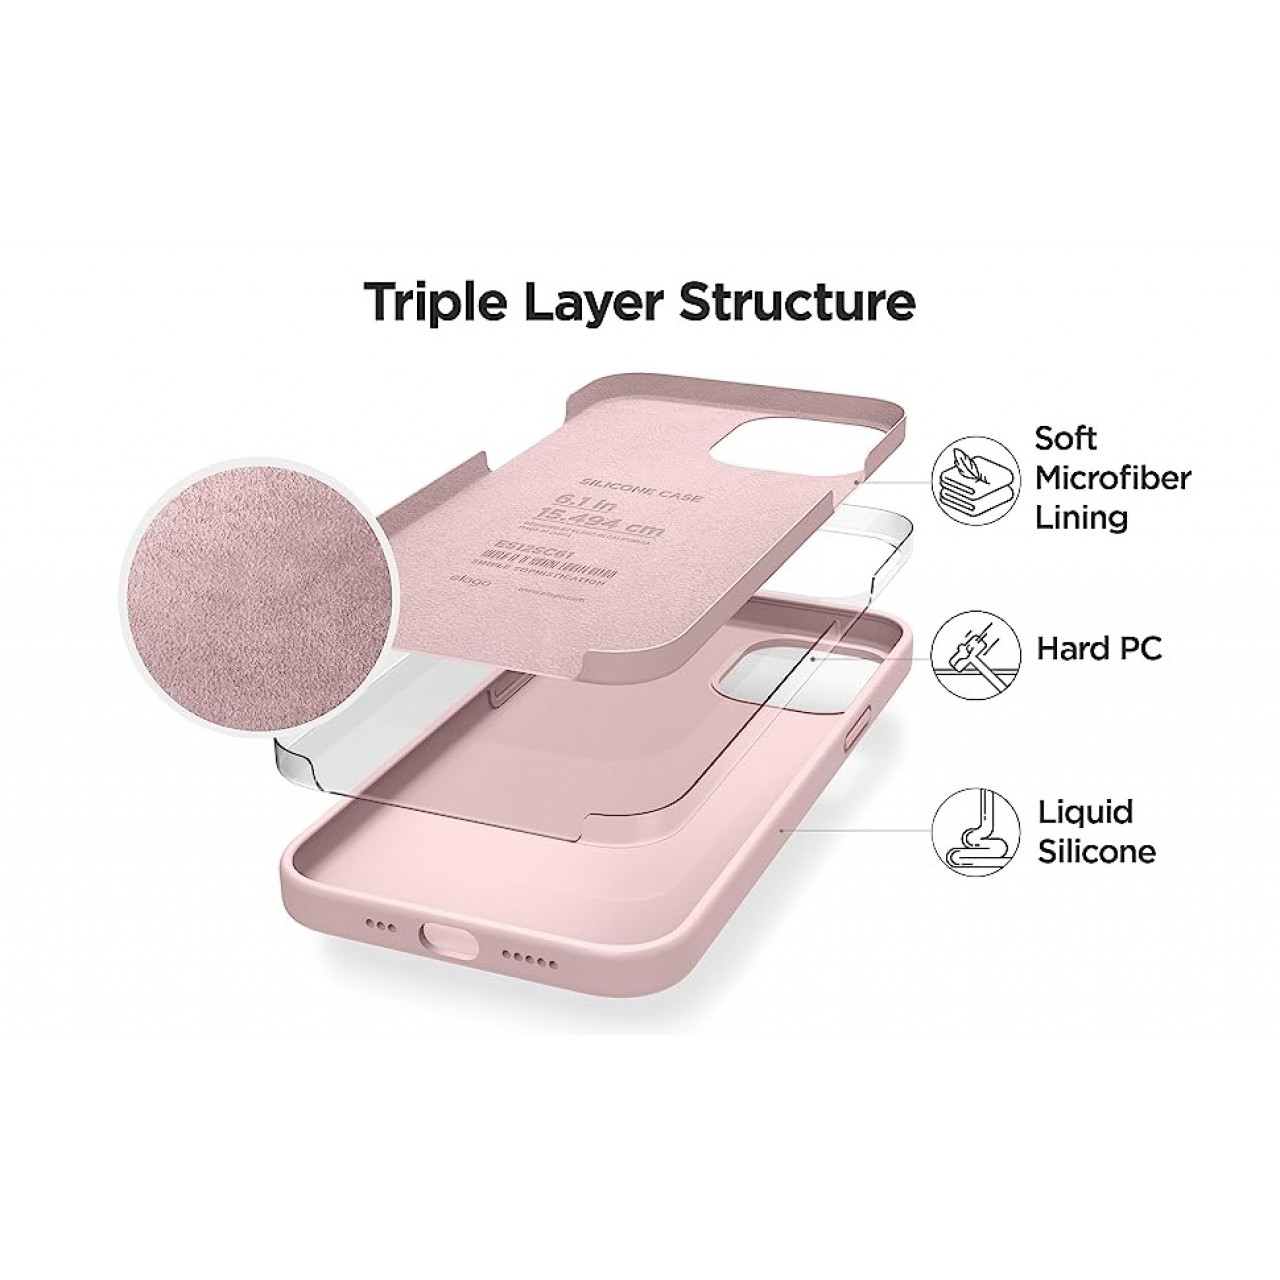 iPhone 12 Pro Max Θήκη Σιλικόνης Ροζ - Back Case Silicone Baby Pink